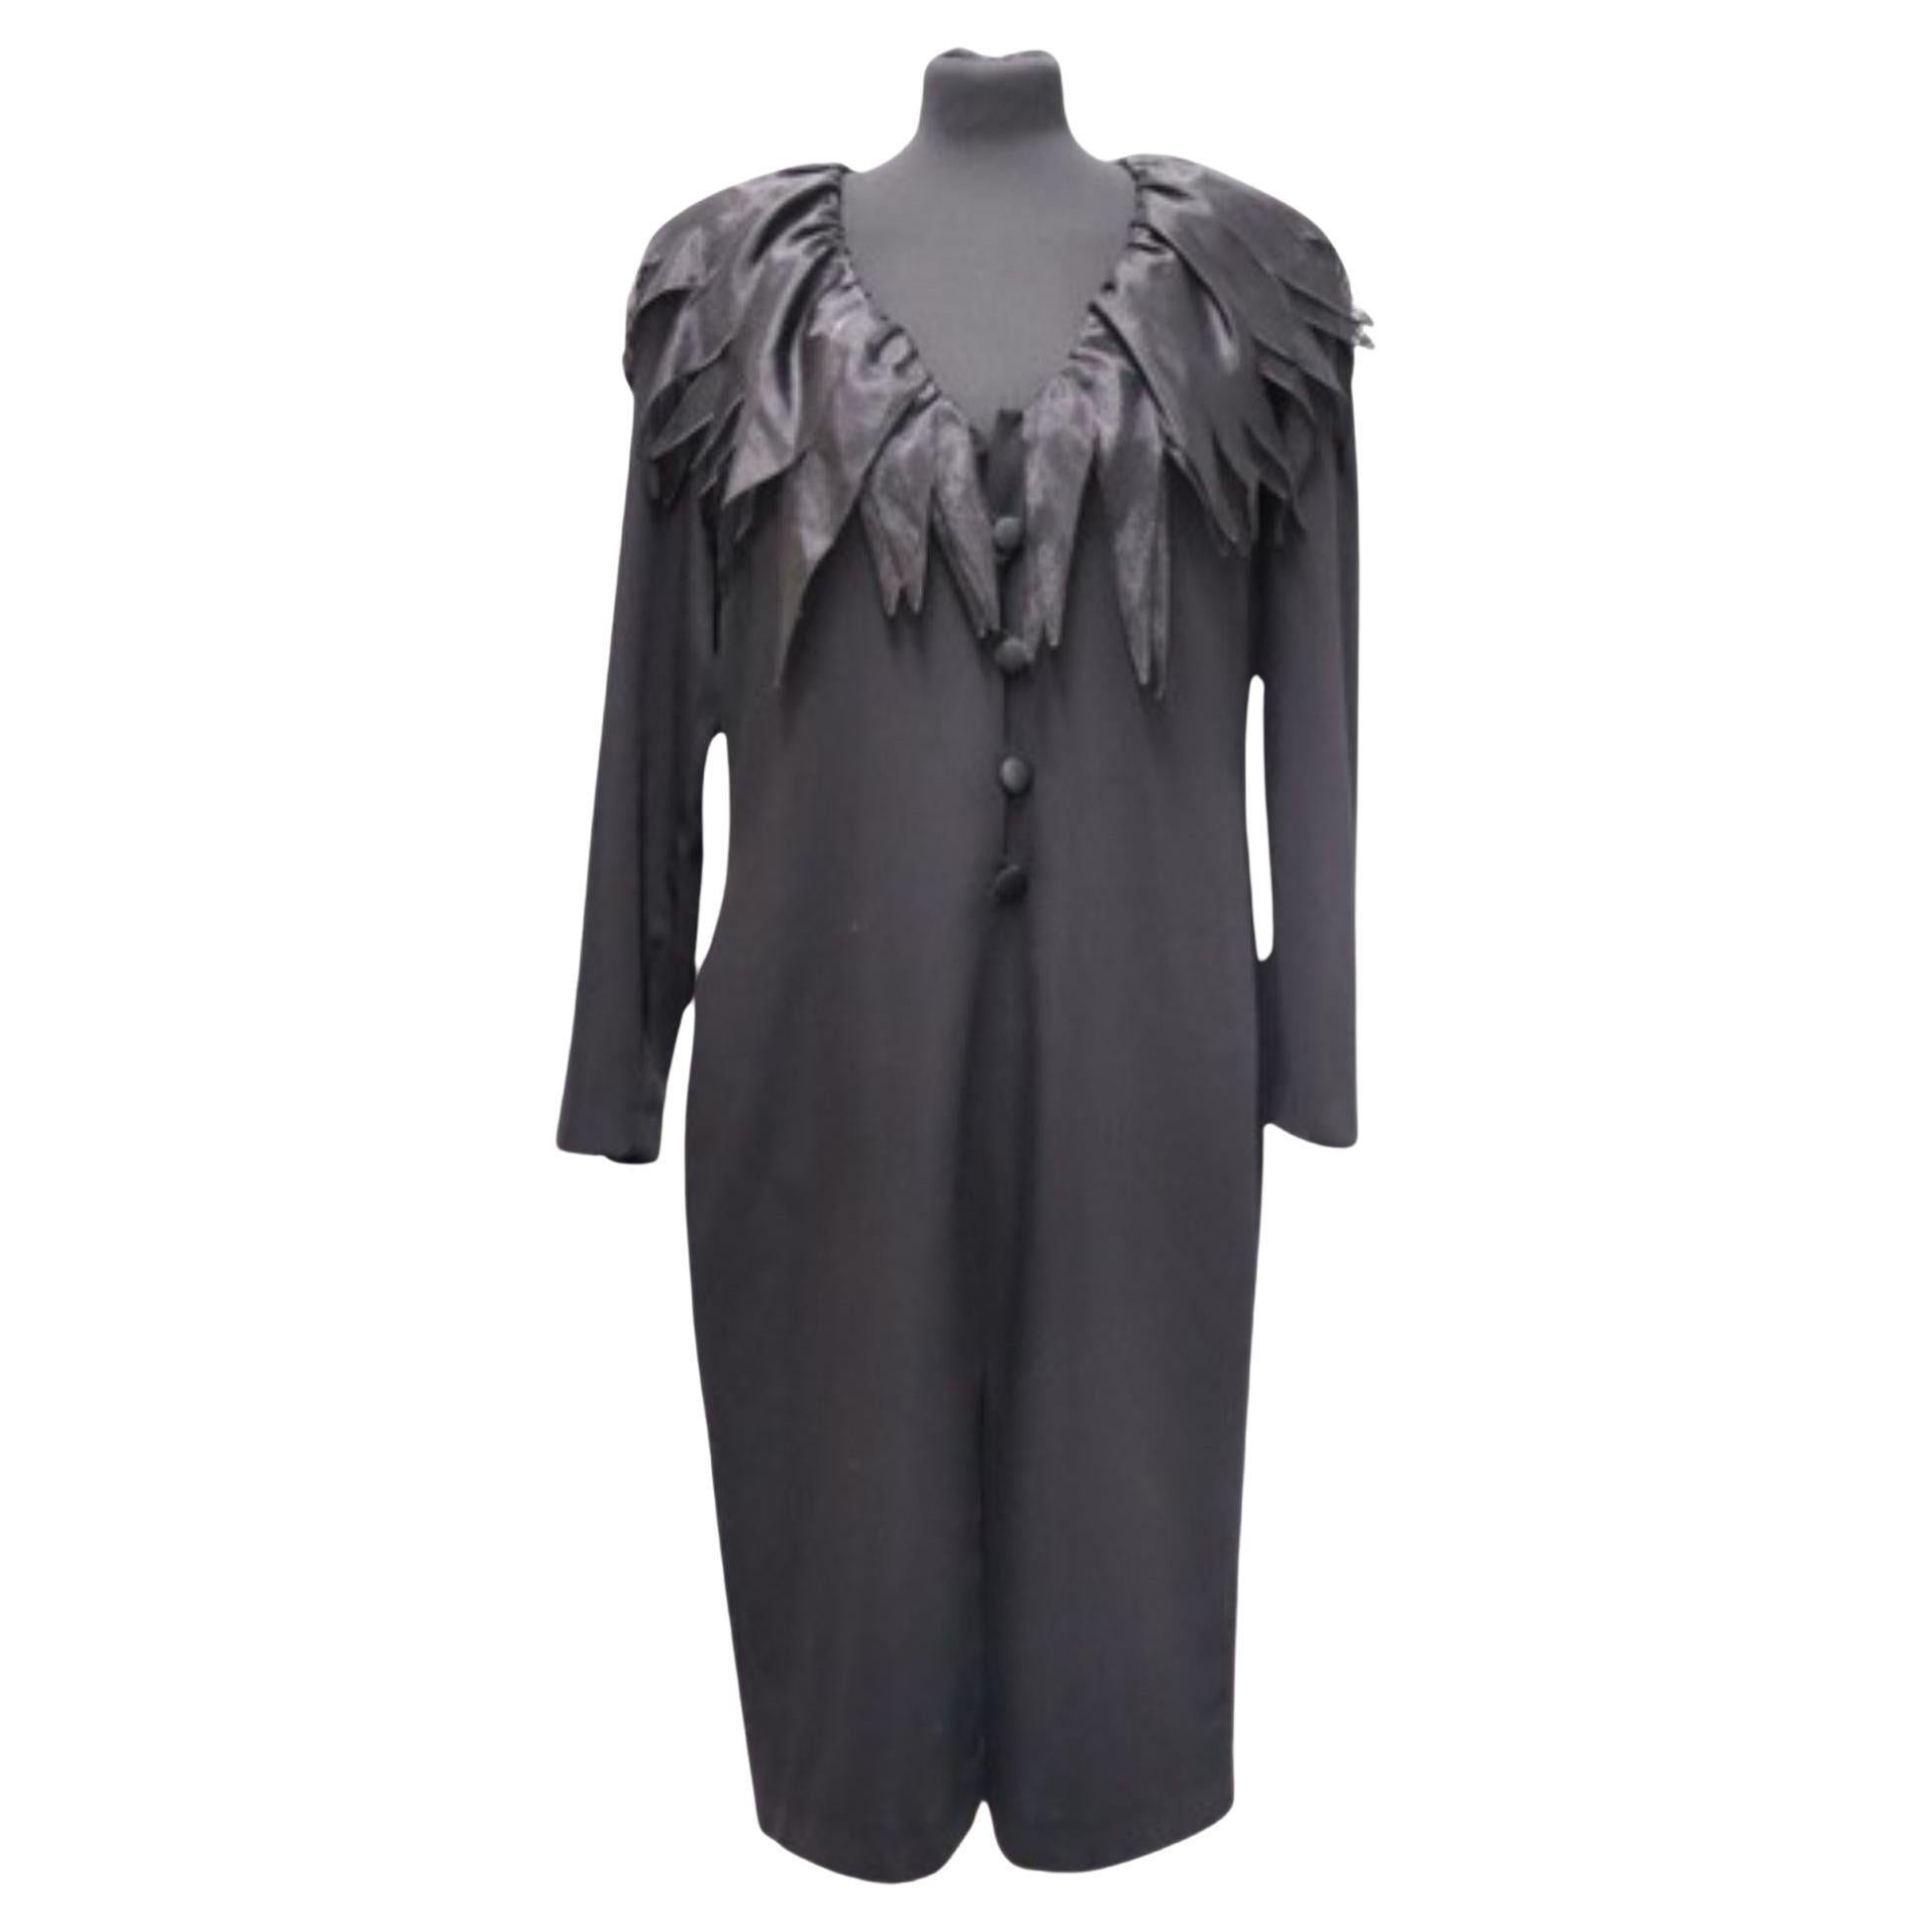 Vintage 90s Givenchy Chiffon Feathered Dress - EU 40 For Sale